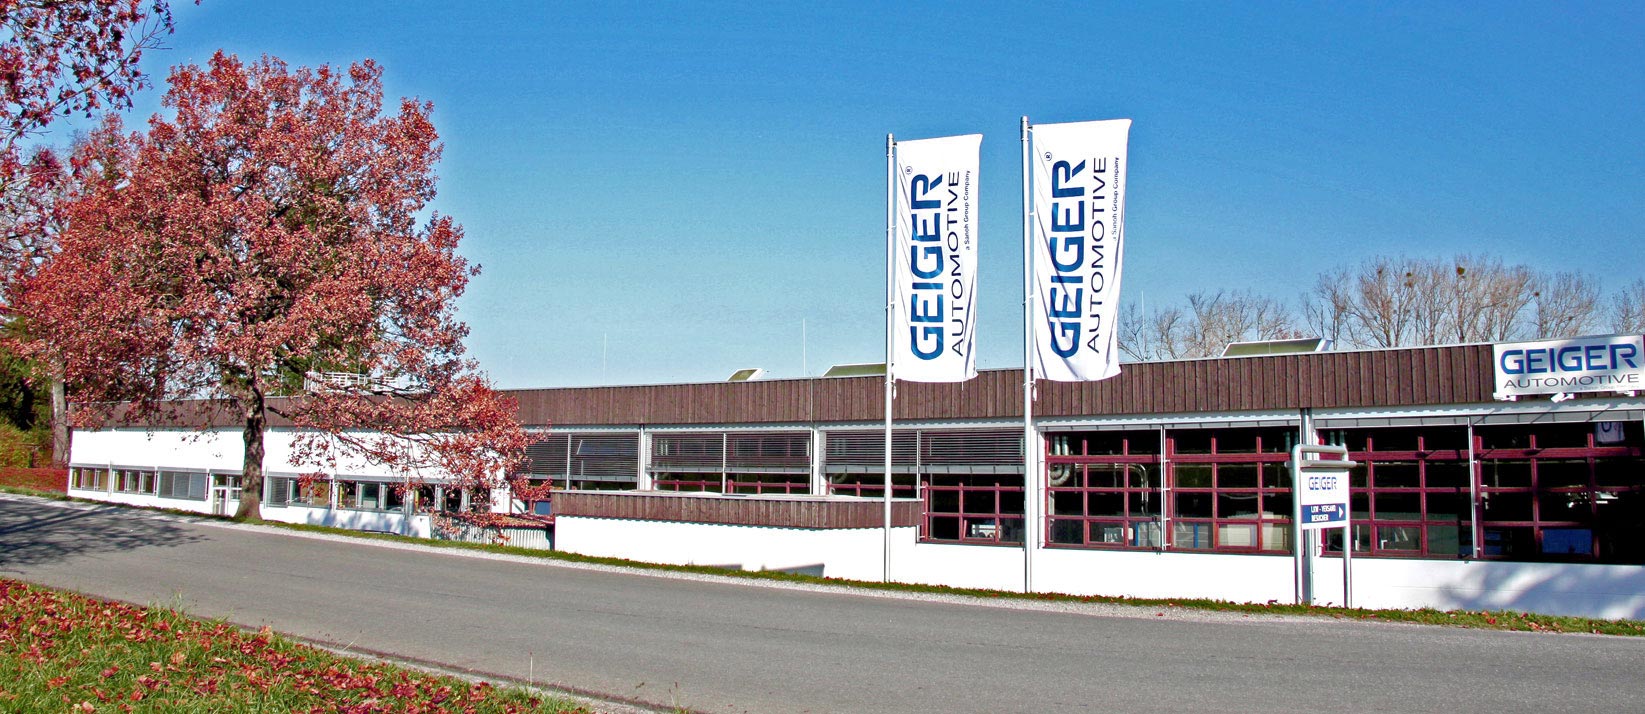 Headerbild Geiger Automotive GmbH - Global Sustainability Manager (m/w/d) - 7771339